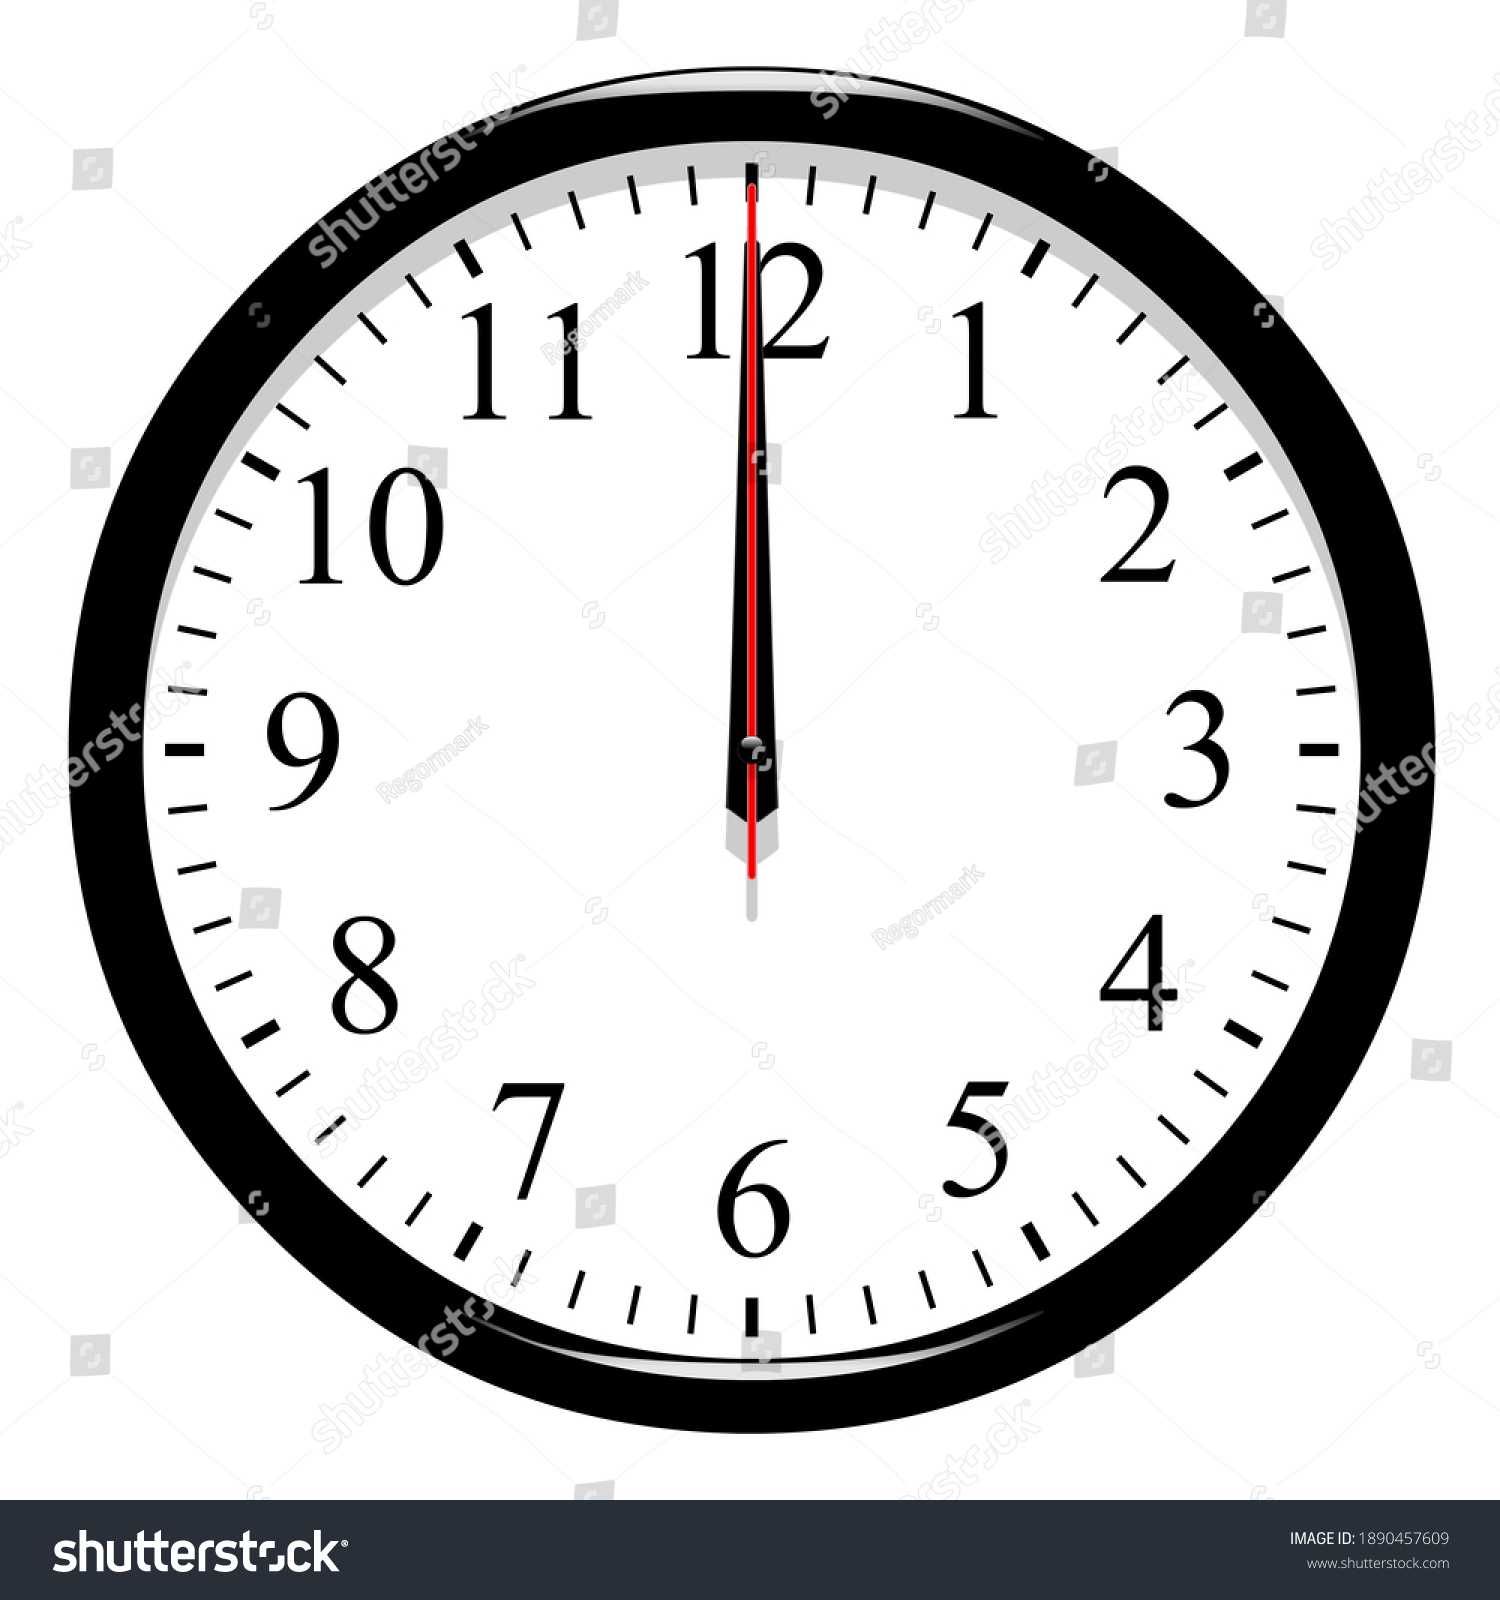 Clock 12 Oclock On White Background Stock Illustration 1890457609